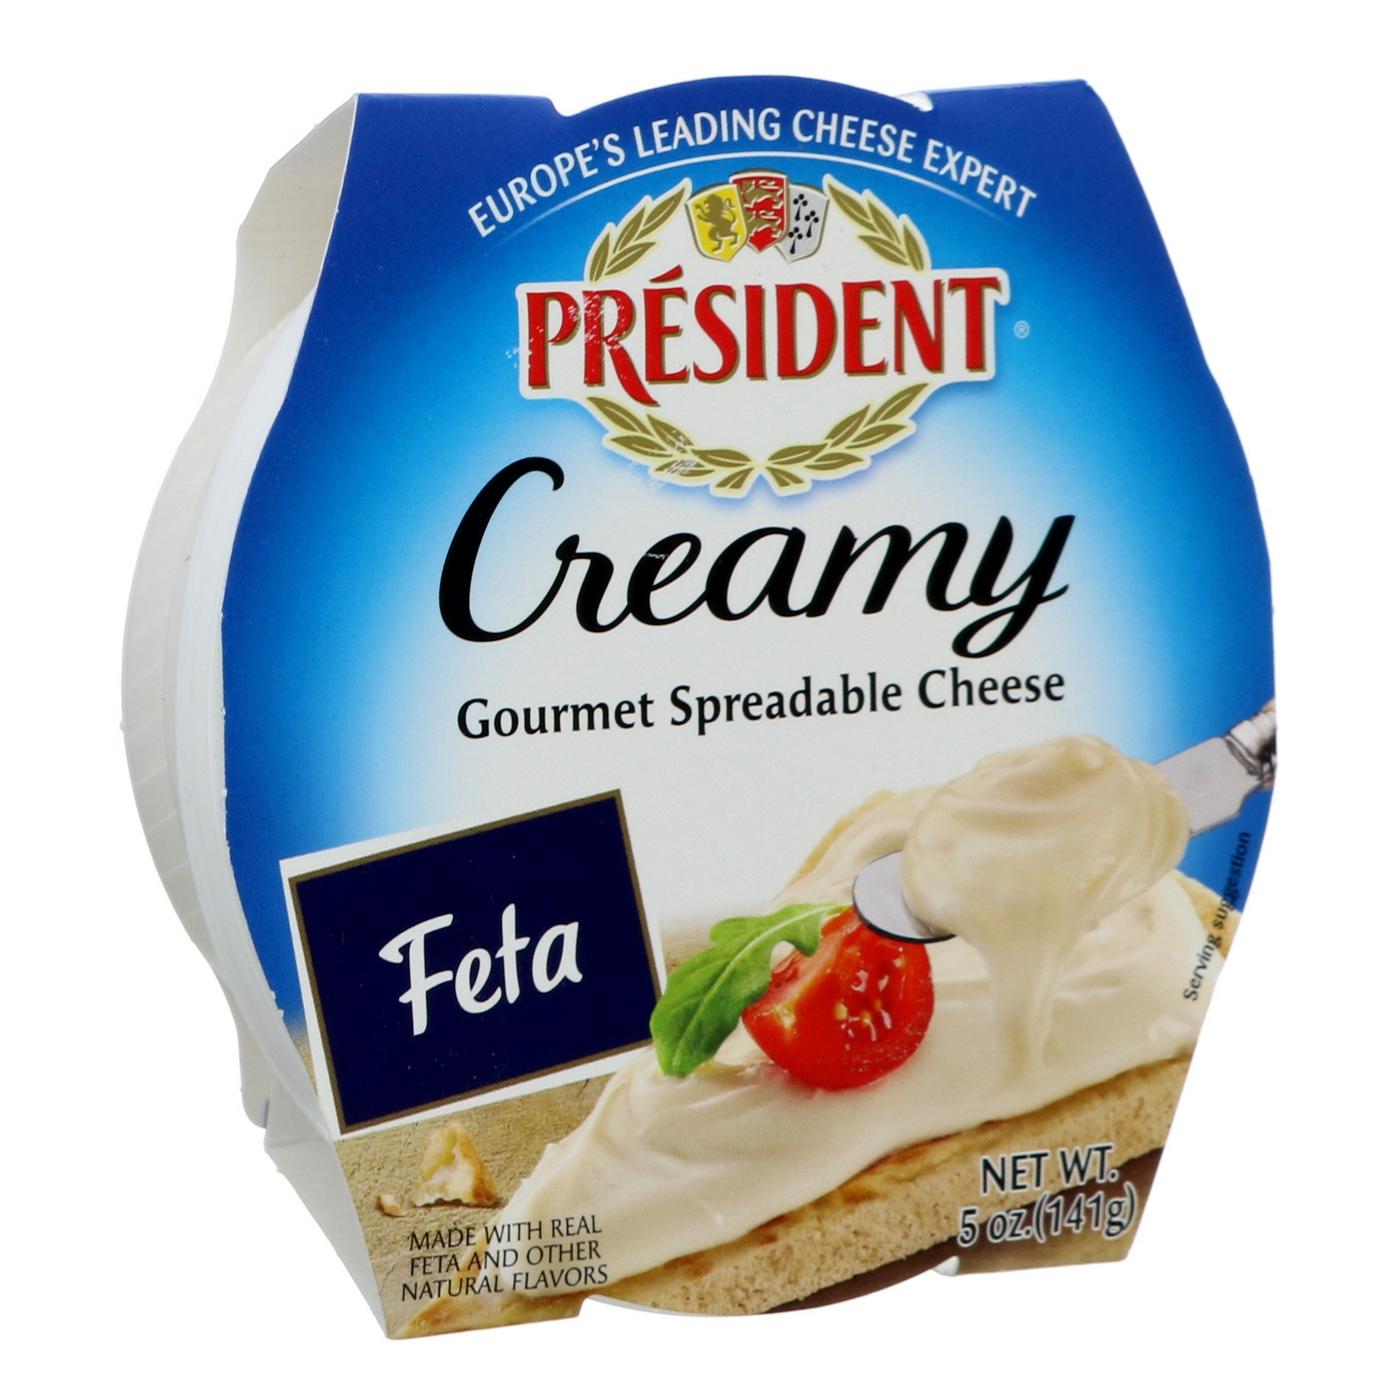 President Creamy Feta Gourmet Spreadable Cheese; image 1 of 2